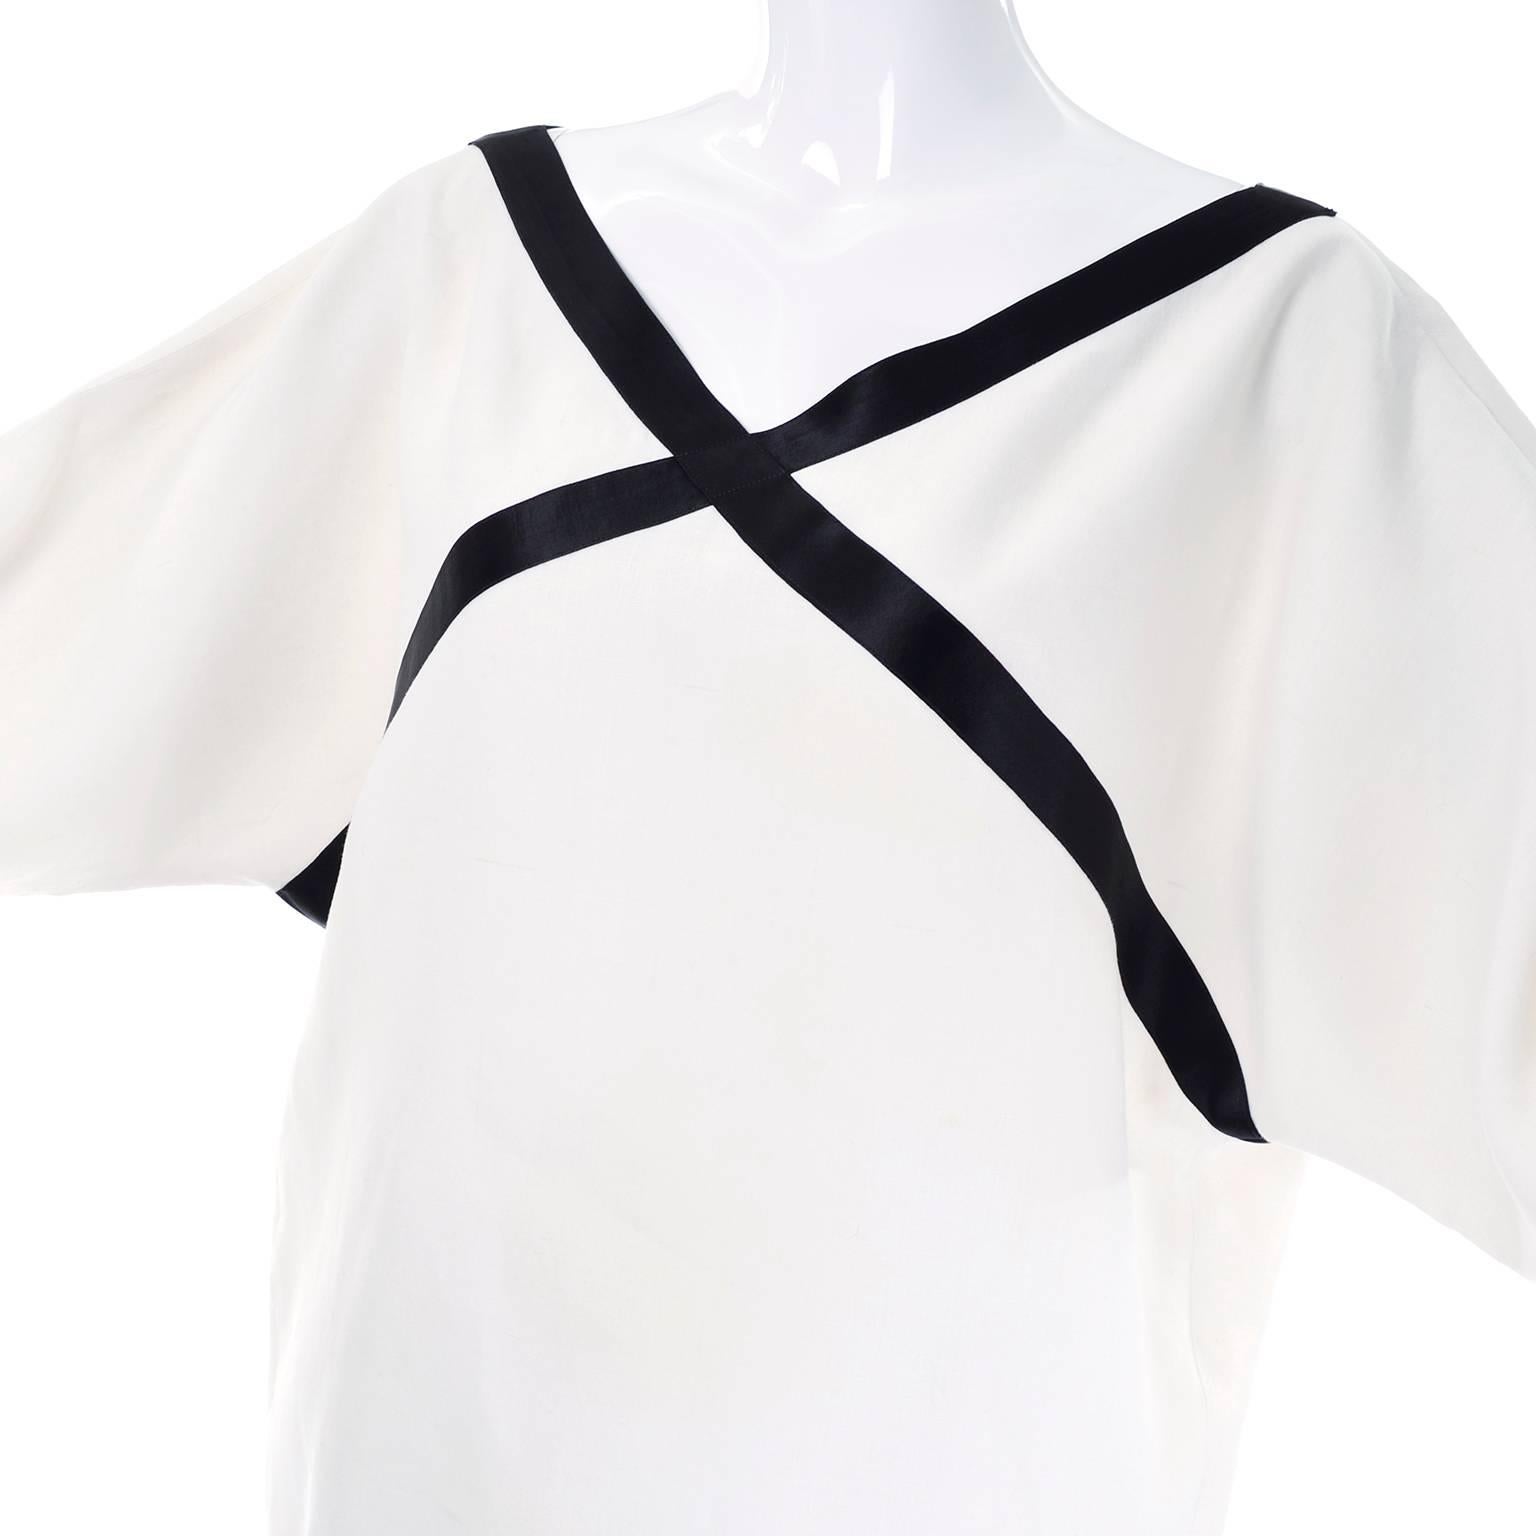 Gray Isaac Mizrahi S/S 1990 Vintage White Linen Tunic Dress w/ Black Satin Trim